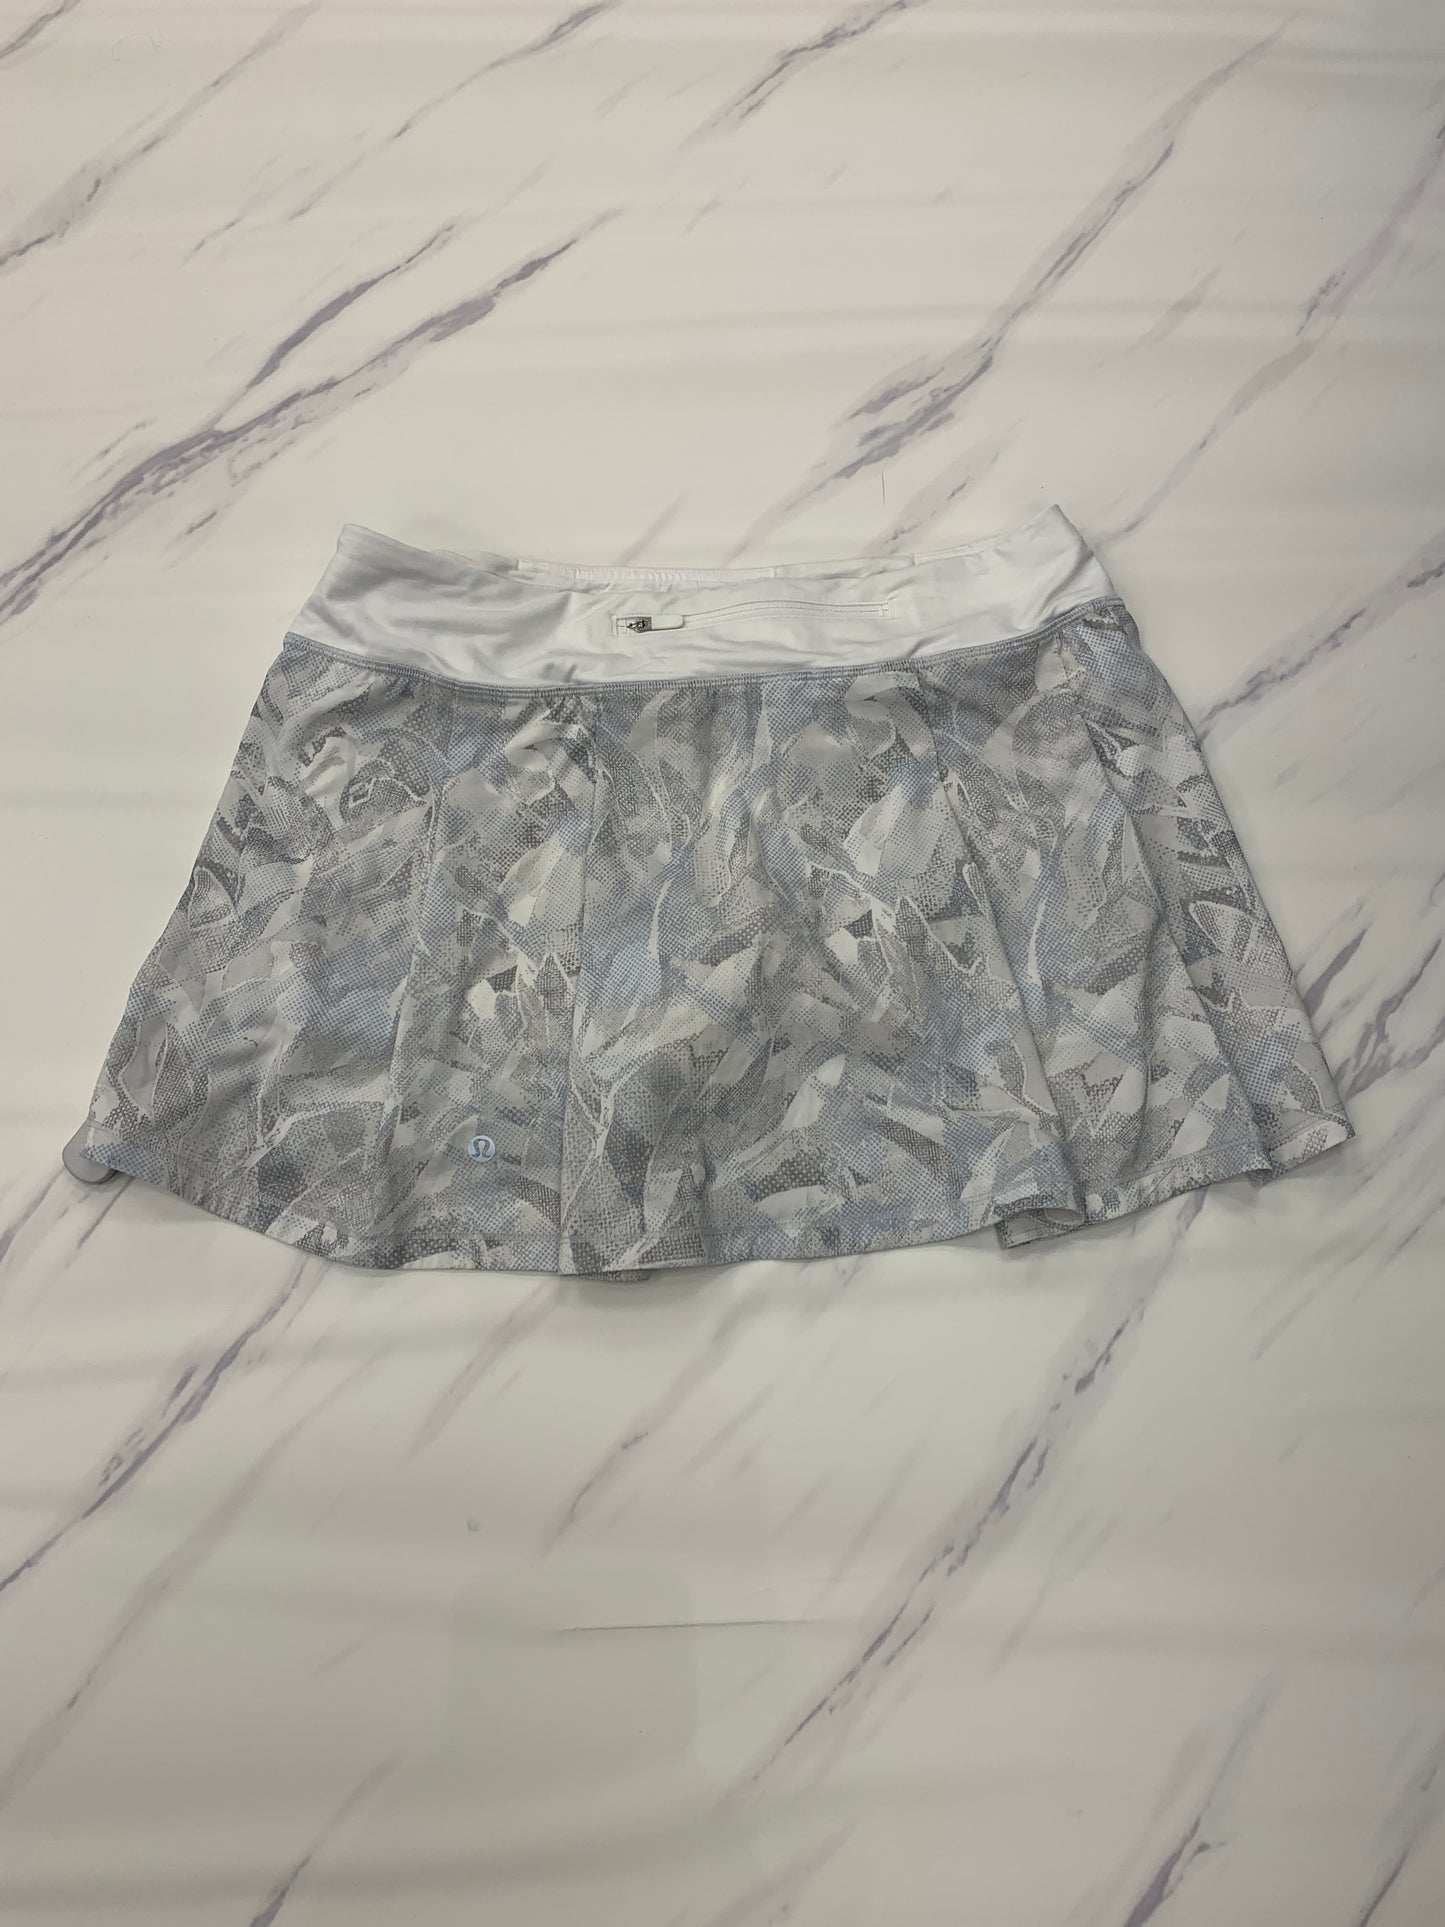 Athletic Skirt By Lululemon  Size: 8